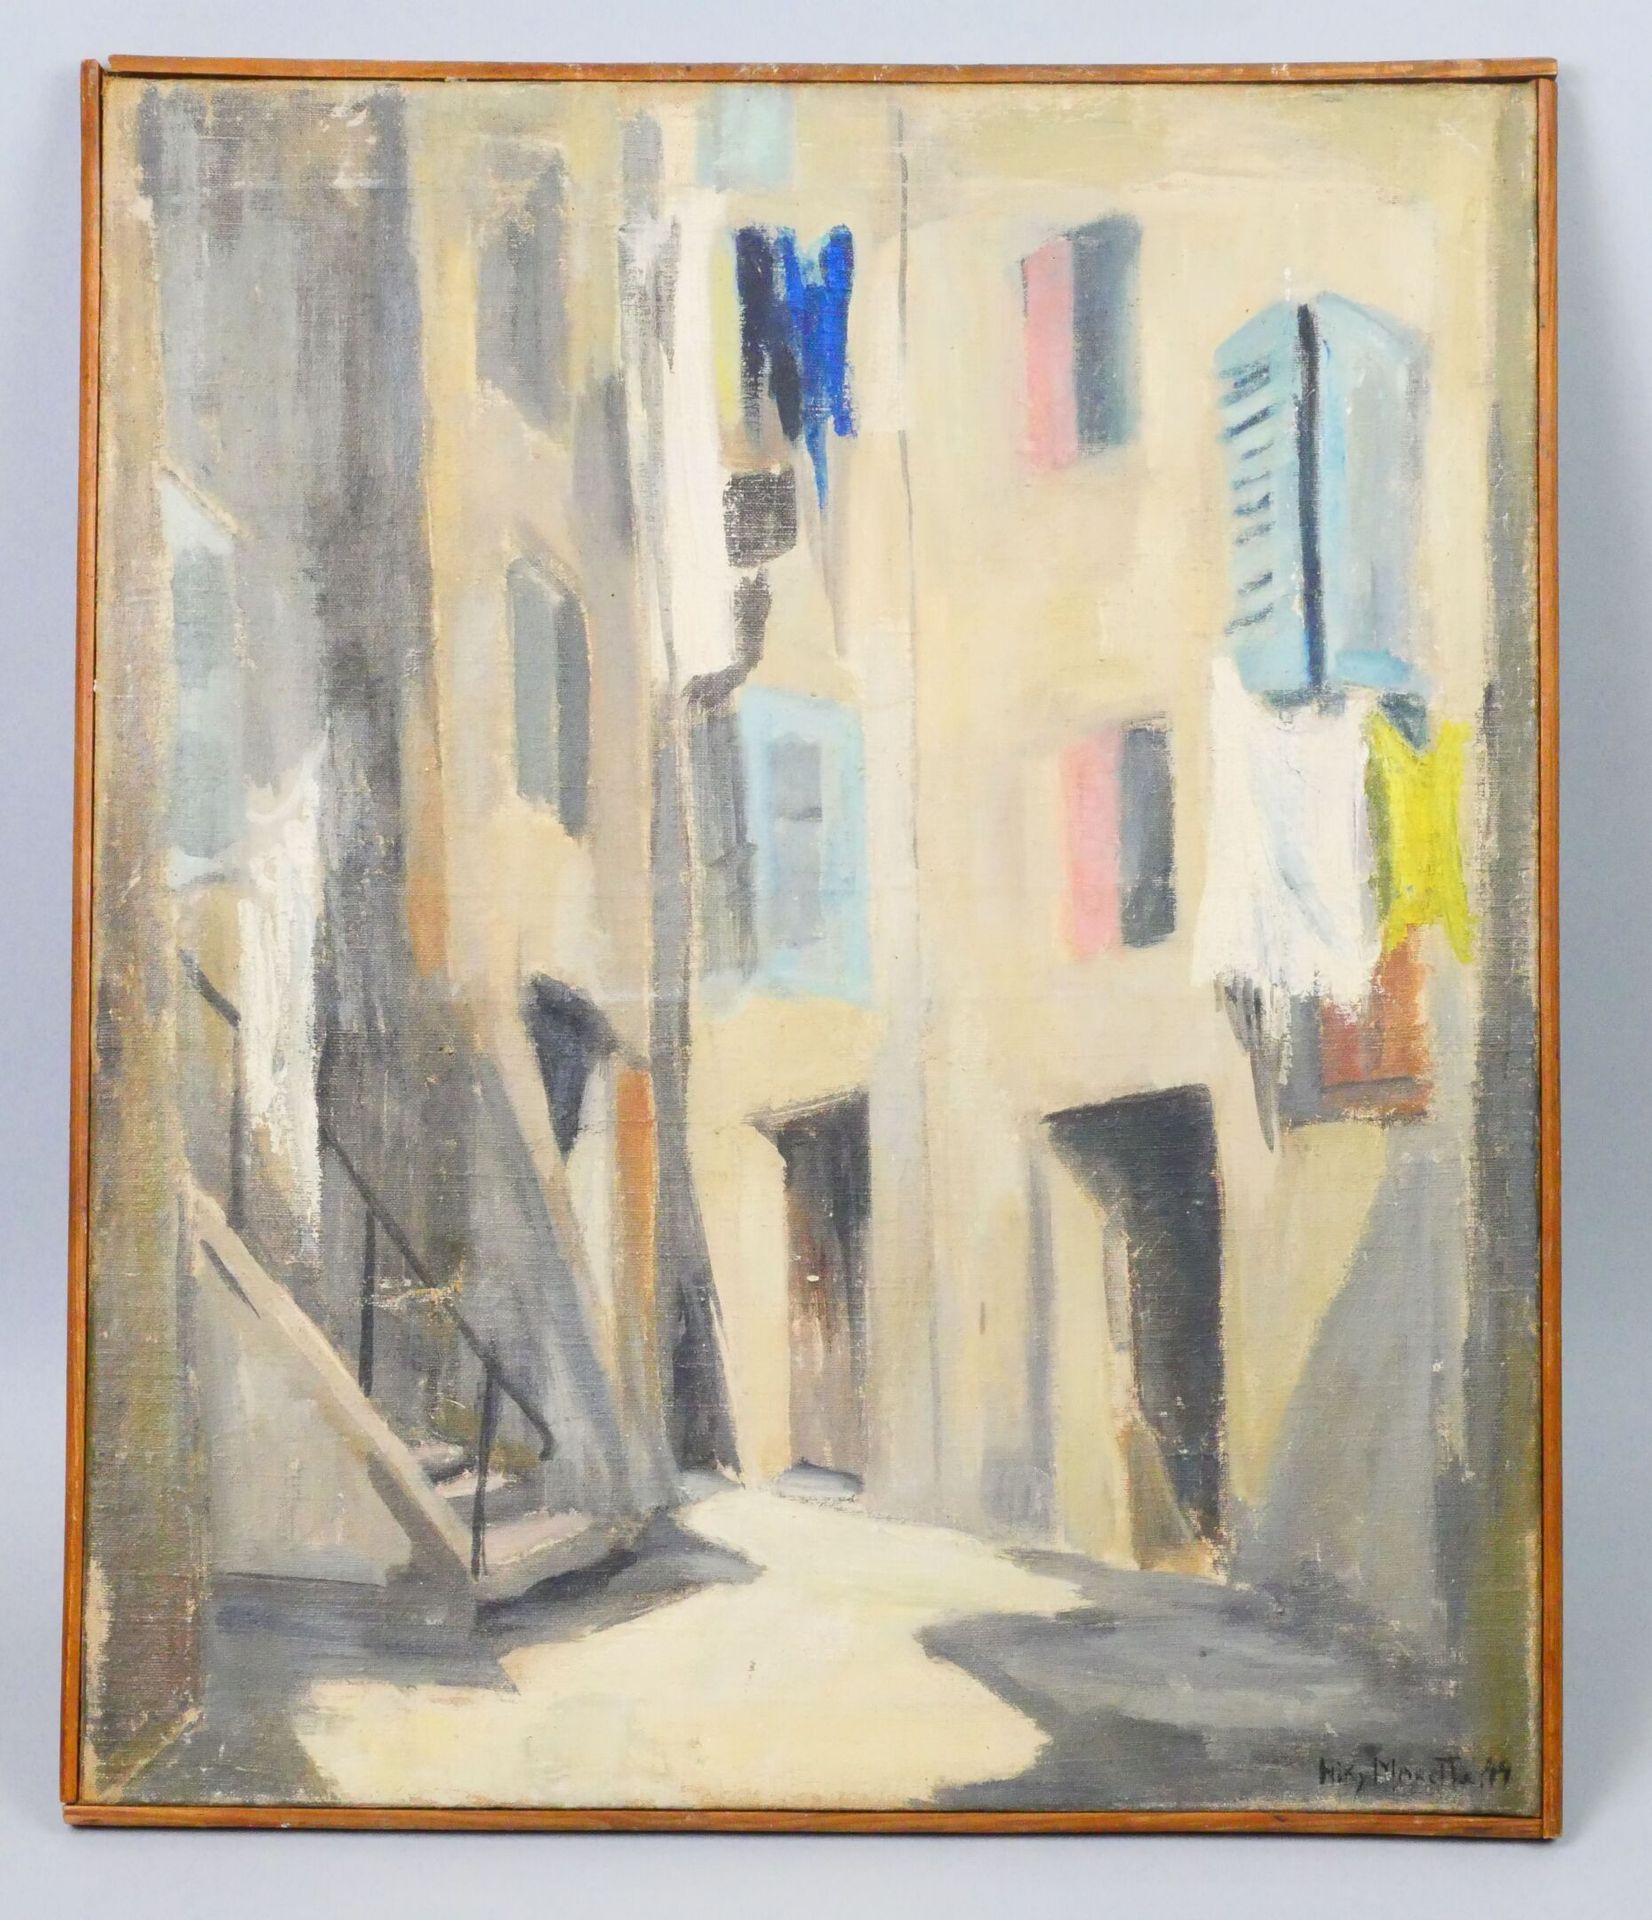 Null 妮可-马利特(1931-2021)
格拉斯的街道景观
布面油画，右下角有NIKY的签名，日期为44年
尺寸：56 x 46 cm 

抽签将于2023&hellip;